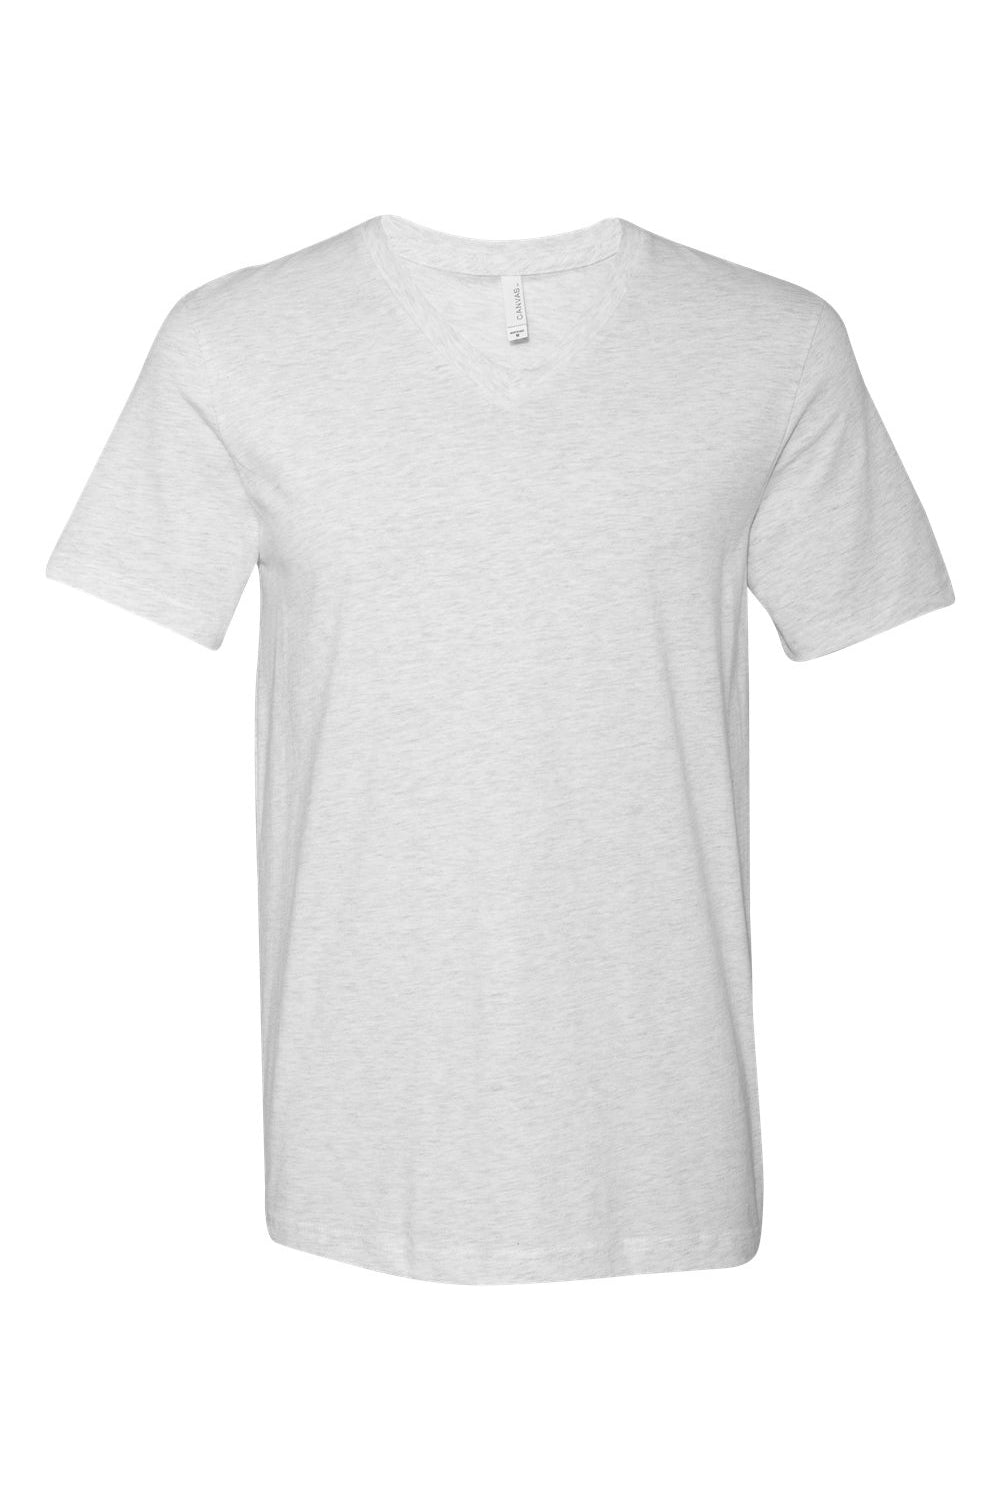 Bella + Canvas BC3005/3005/3655C Mens Jersey Short Sleeve V-Neck T-Shirt Ash Grey Flat Front